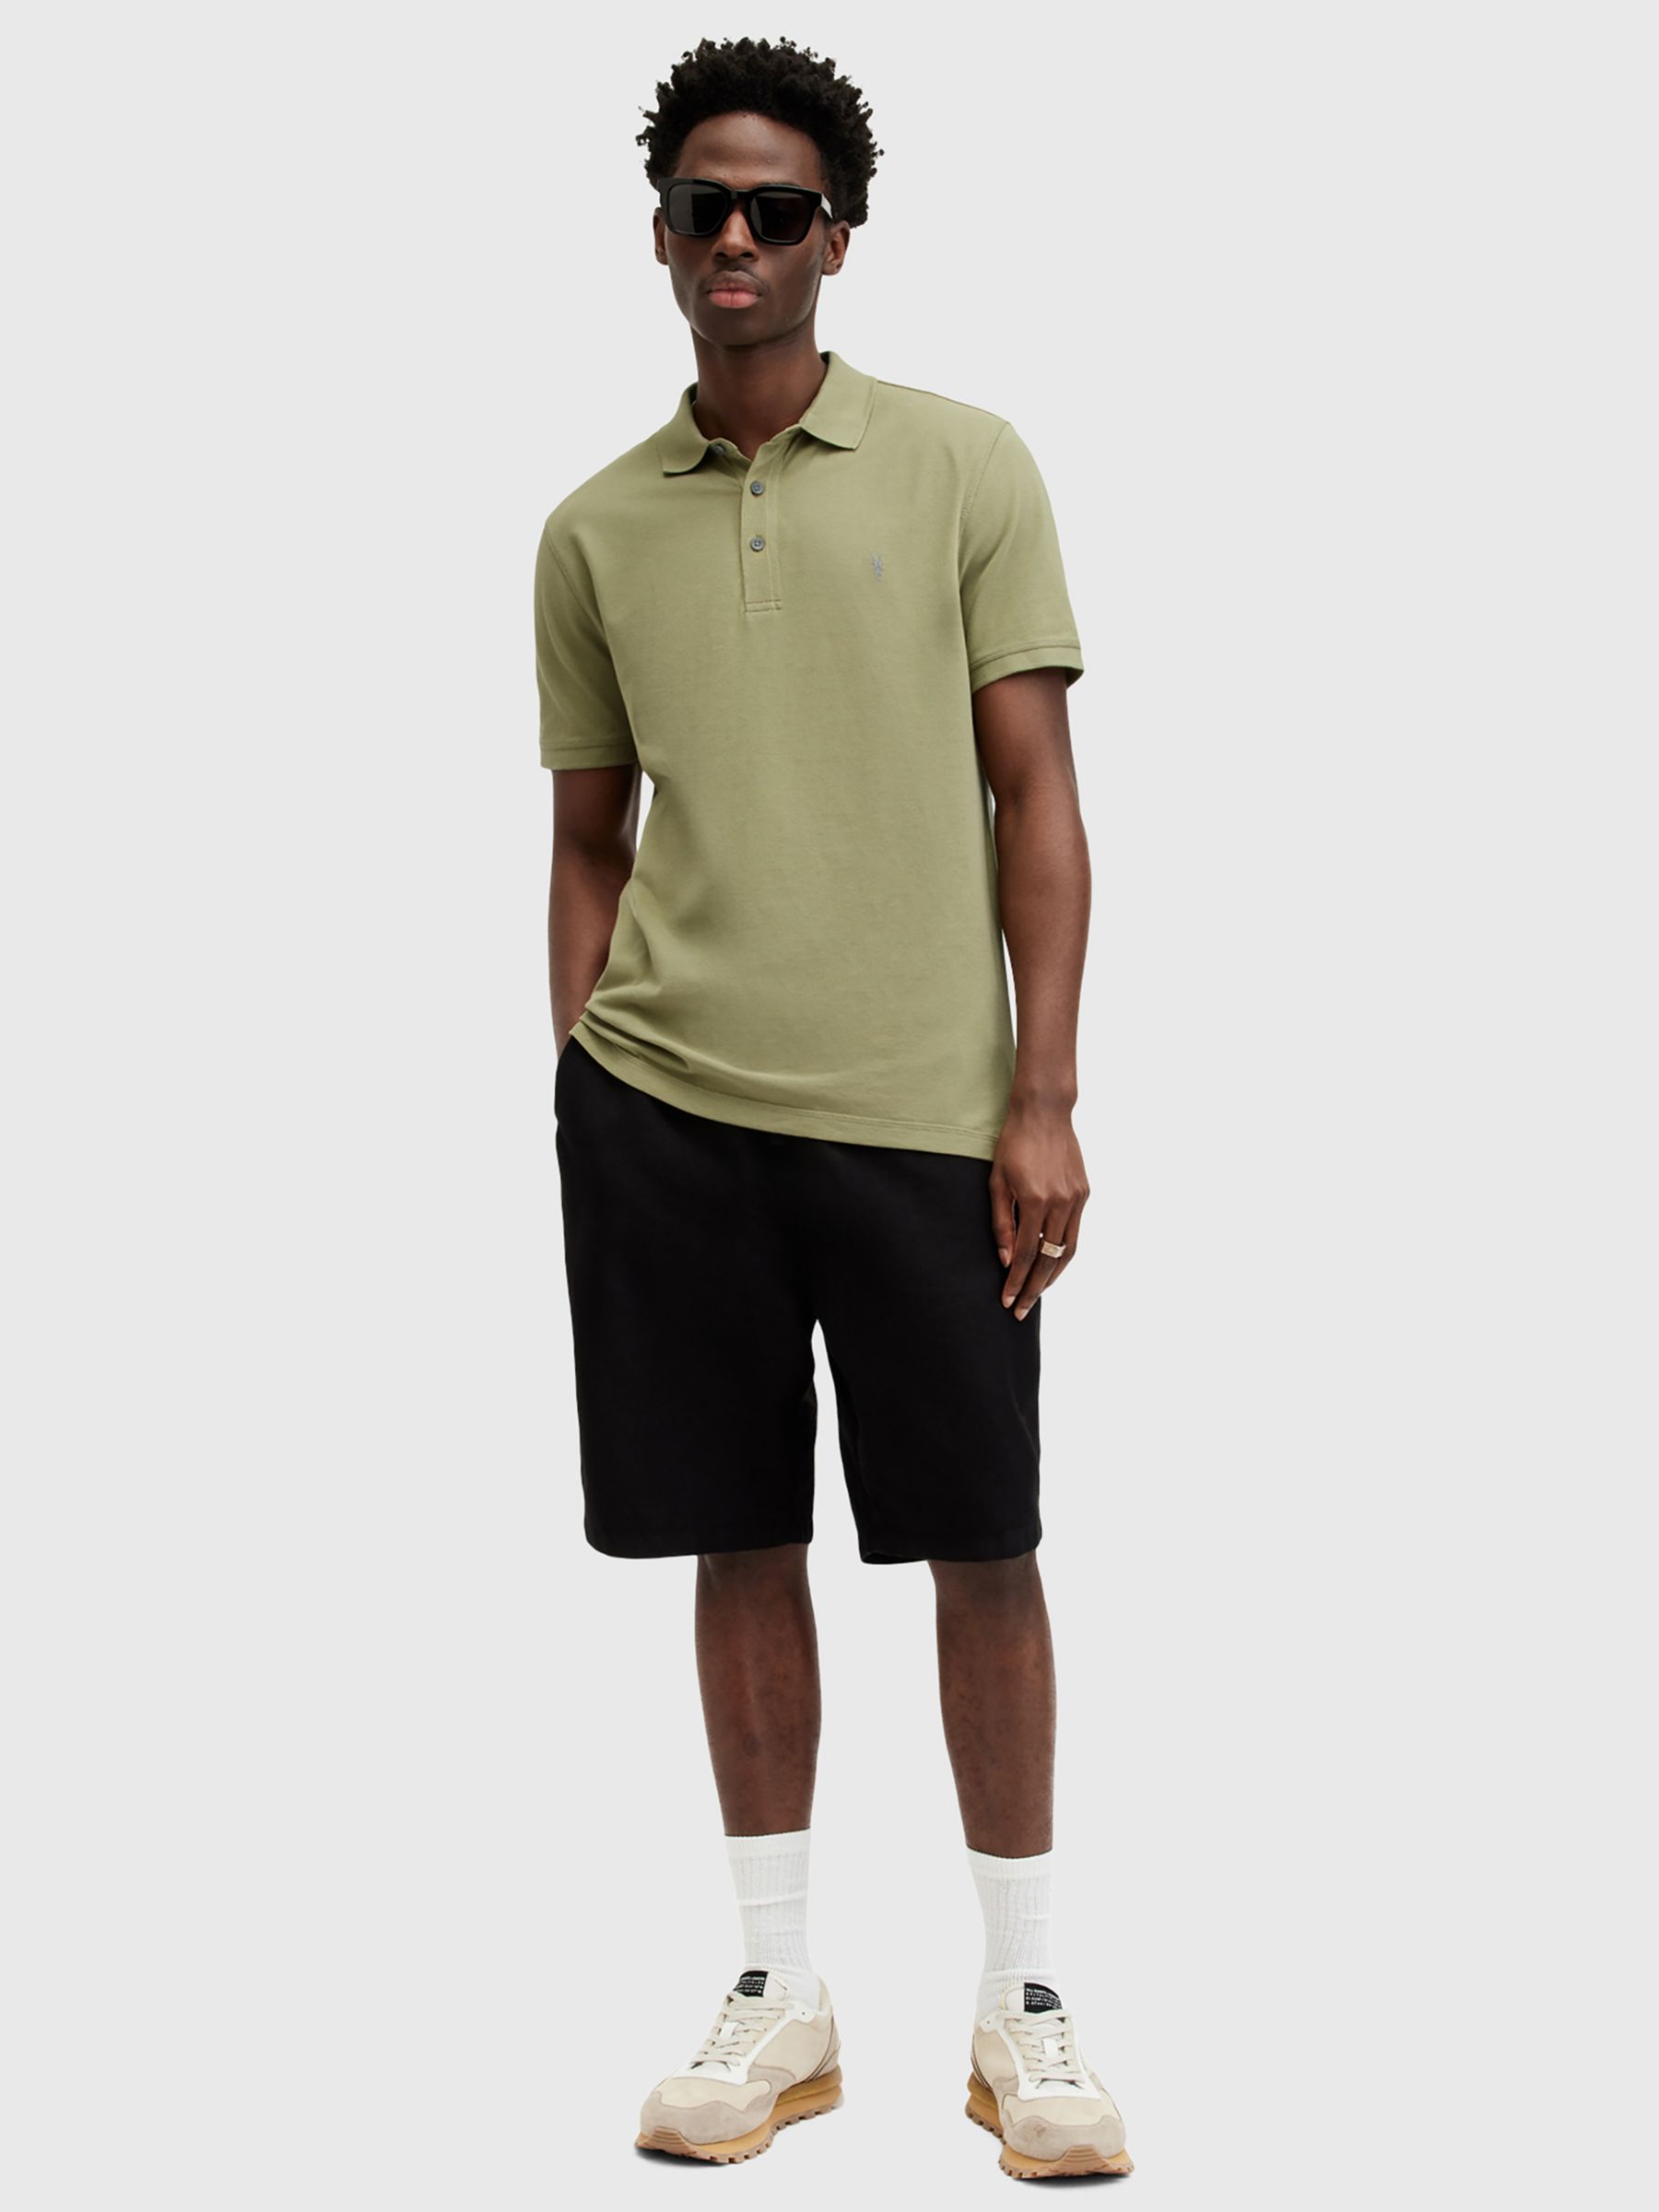 AllSaints Reform Short Sleeve Polo Shirt, Pack of 2, Green/White, XS